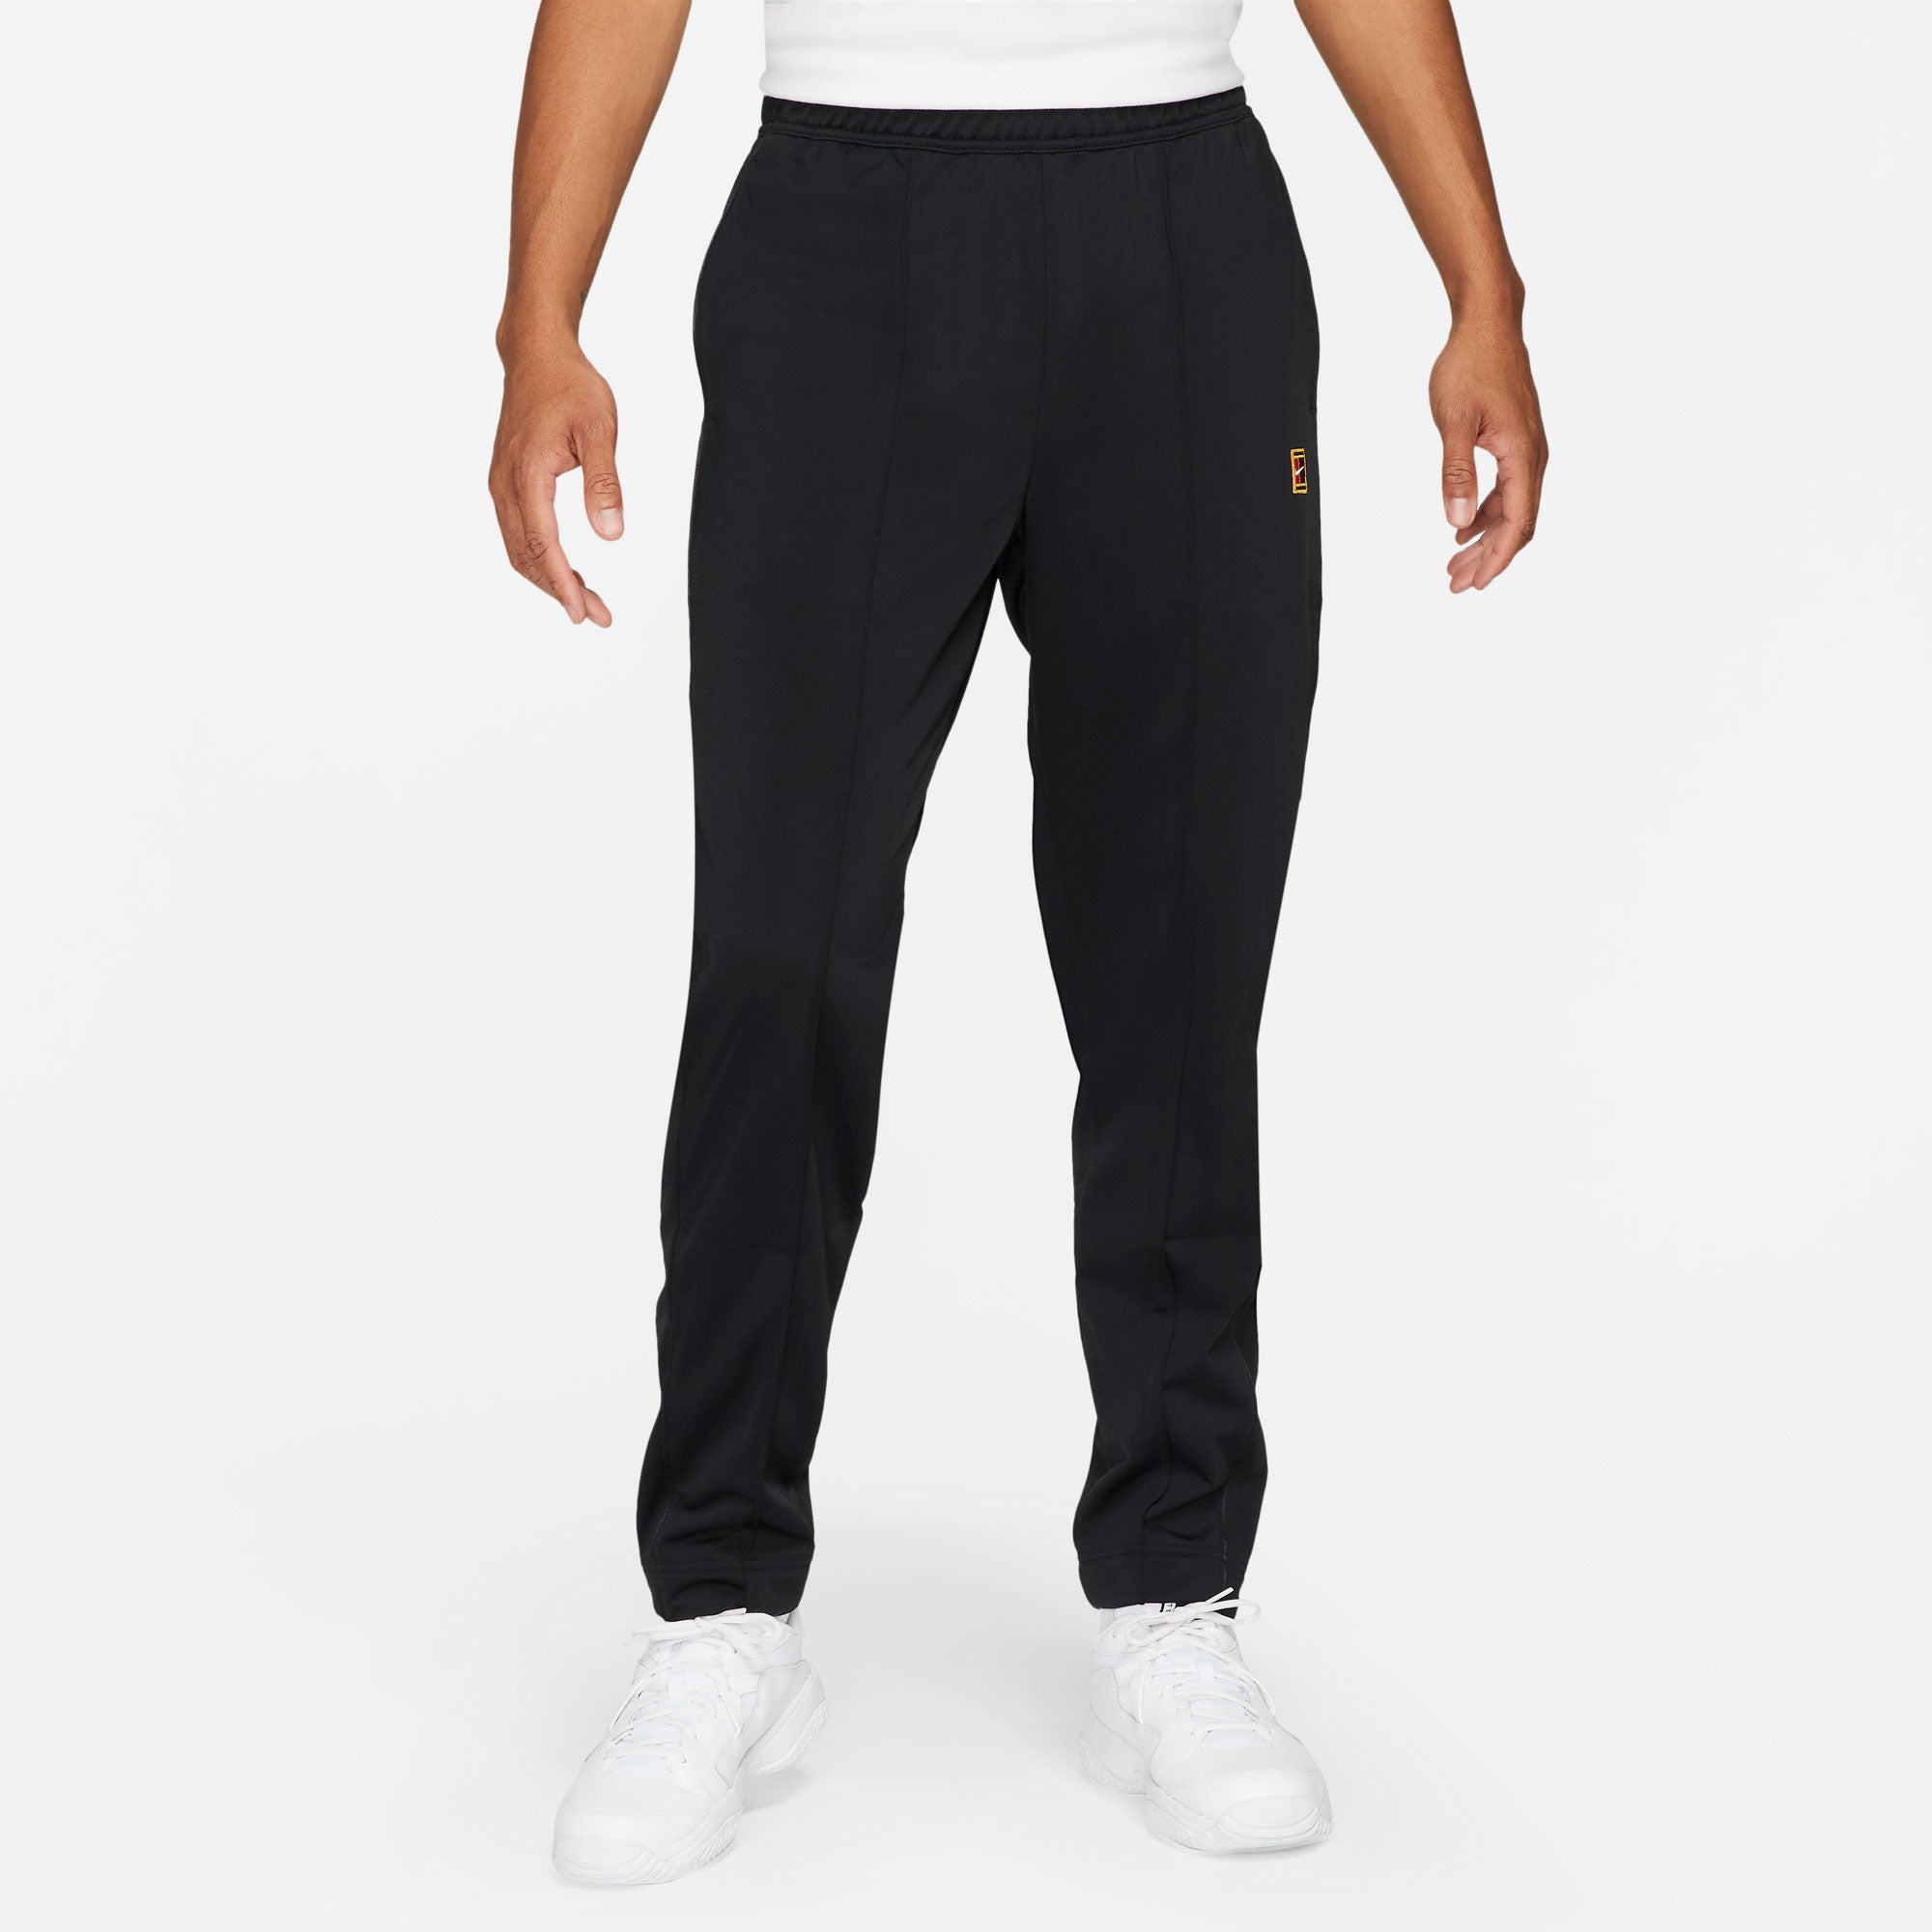 NikeCourt Heritage Men's Tennis Pants Black (1)